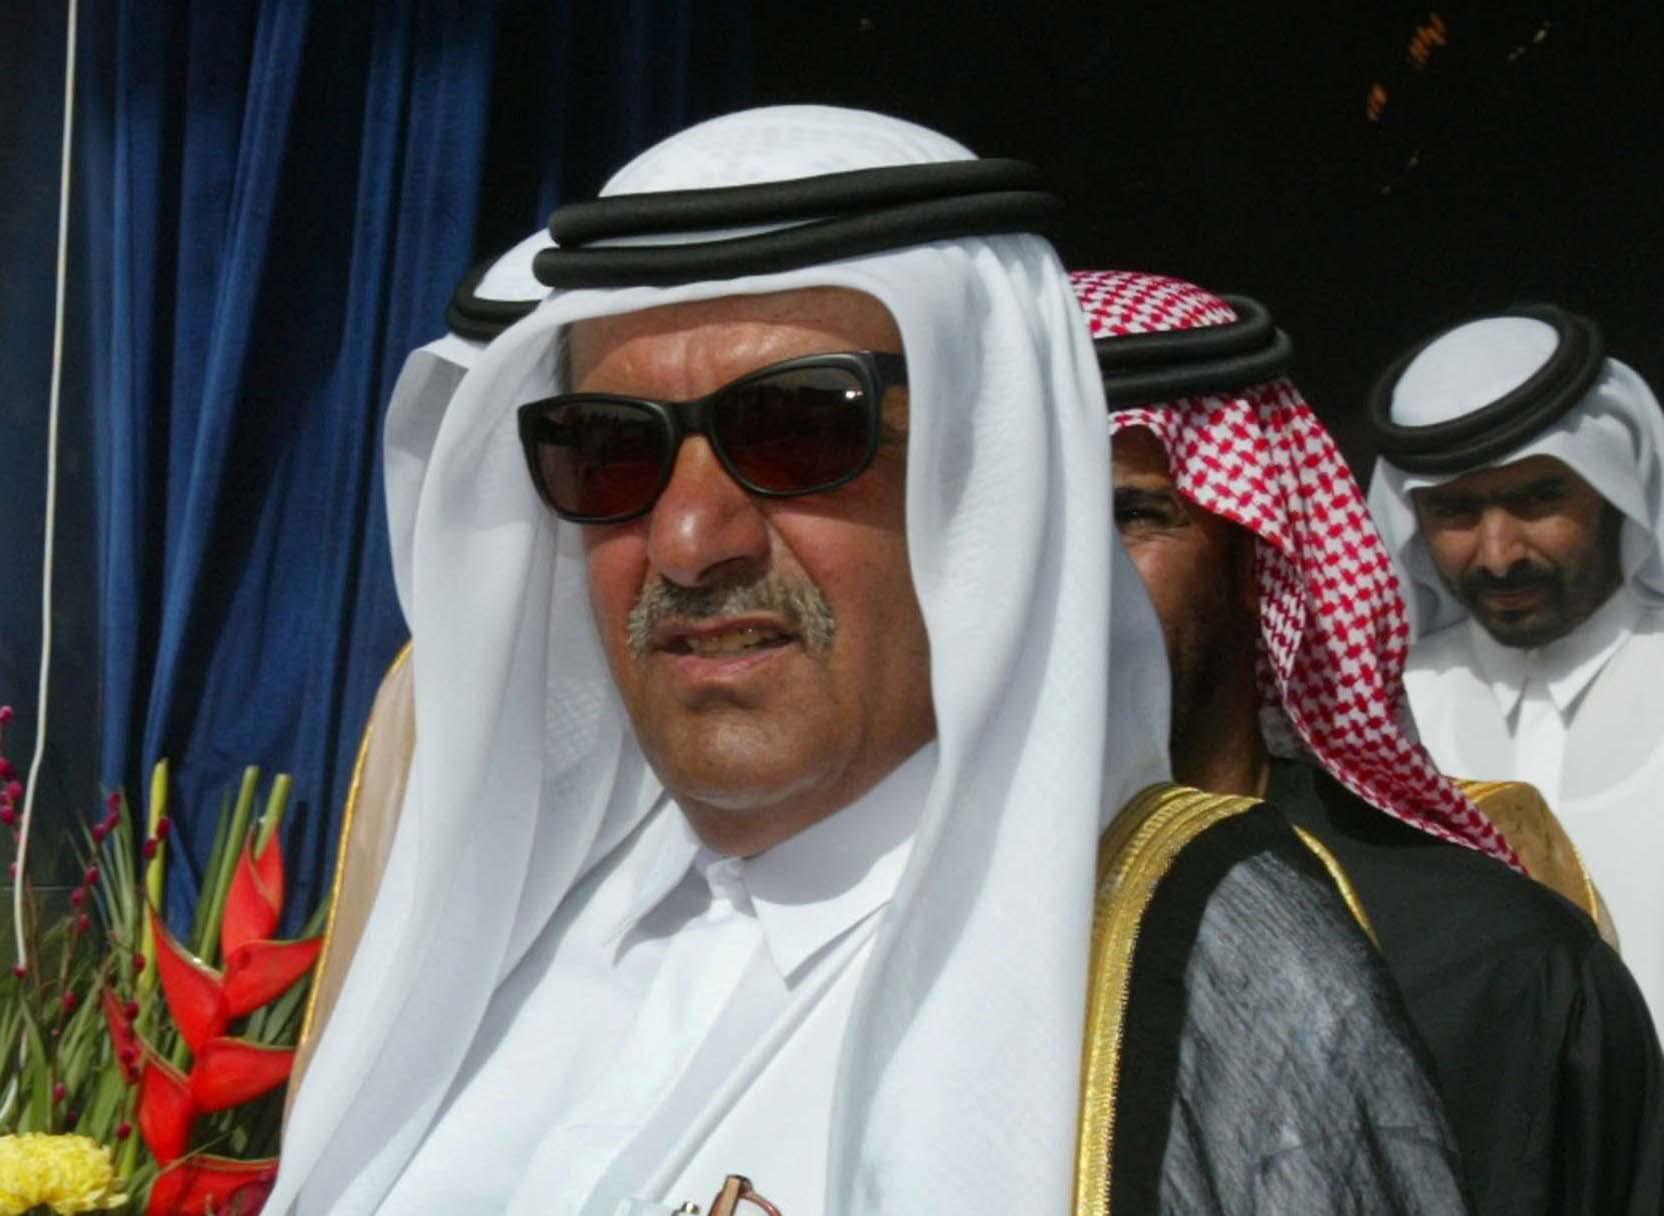 Sheikh Hamdan bin Rashid Al Maktoum